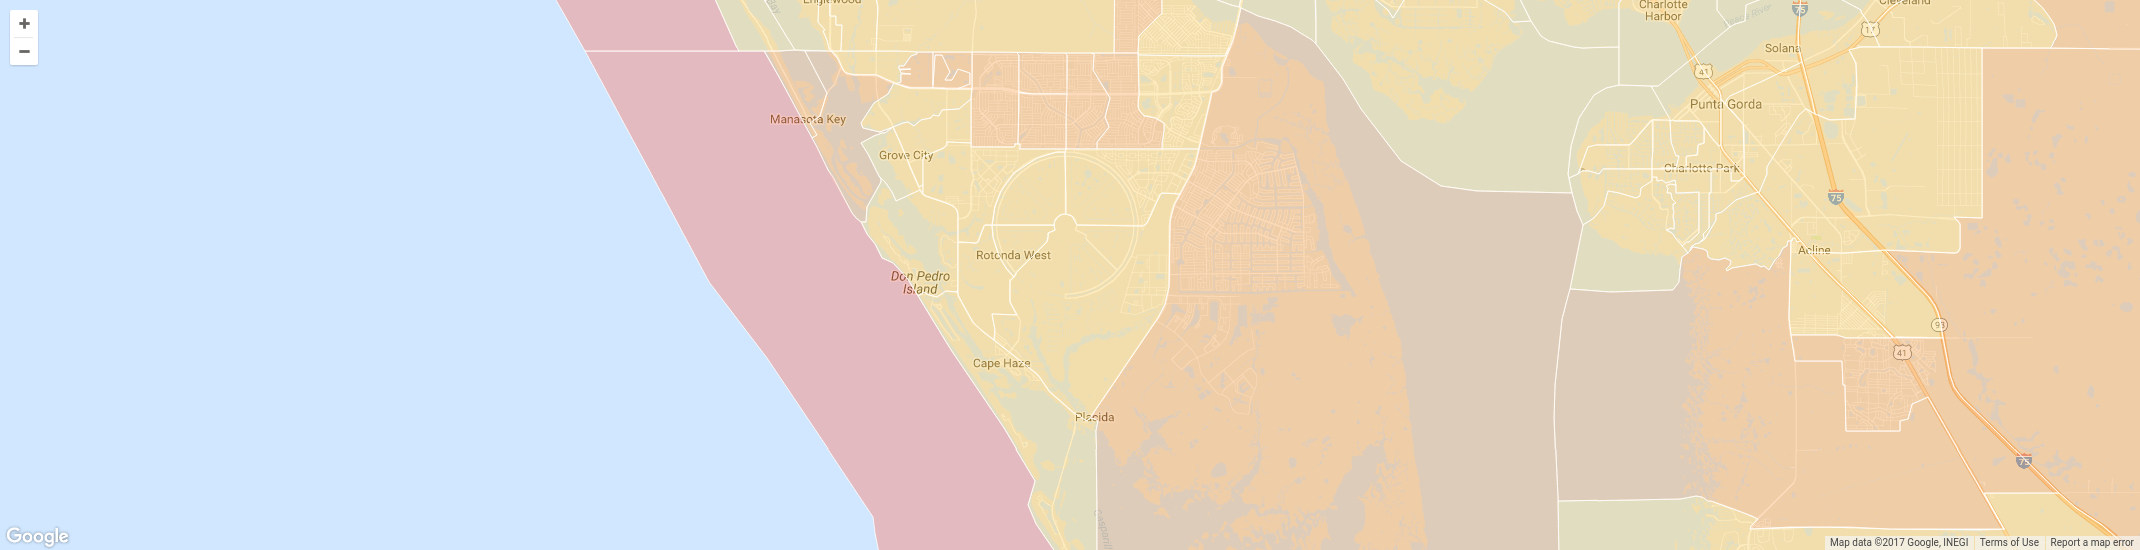 West Naples Rotonda Florida And Area Map - Rotonda Florida Map